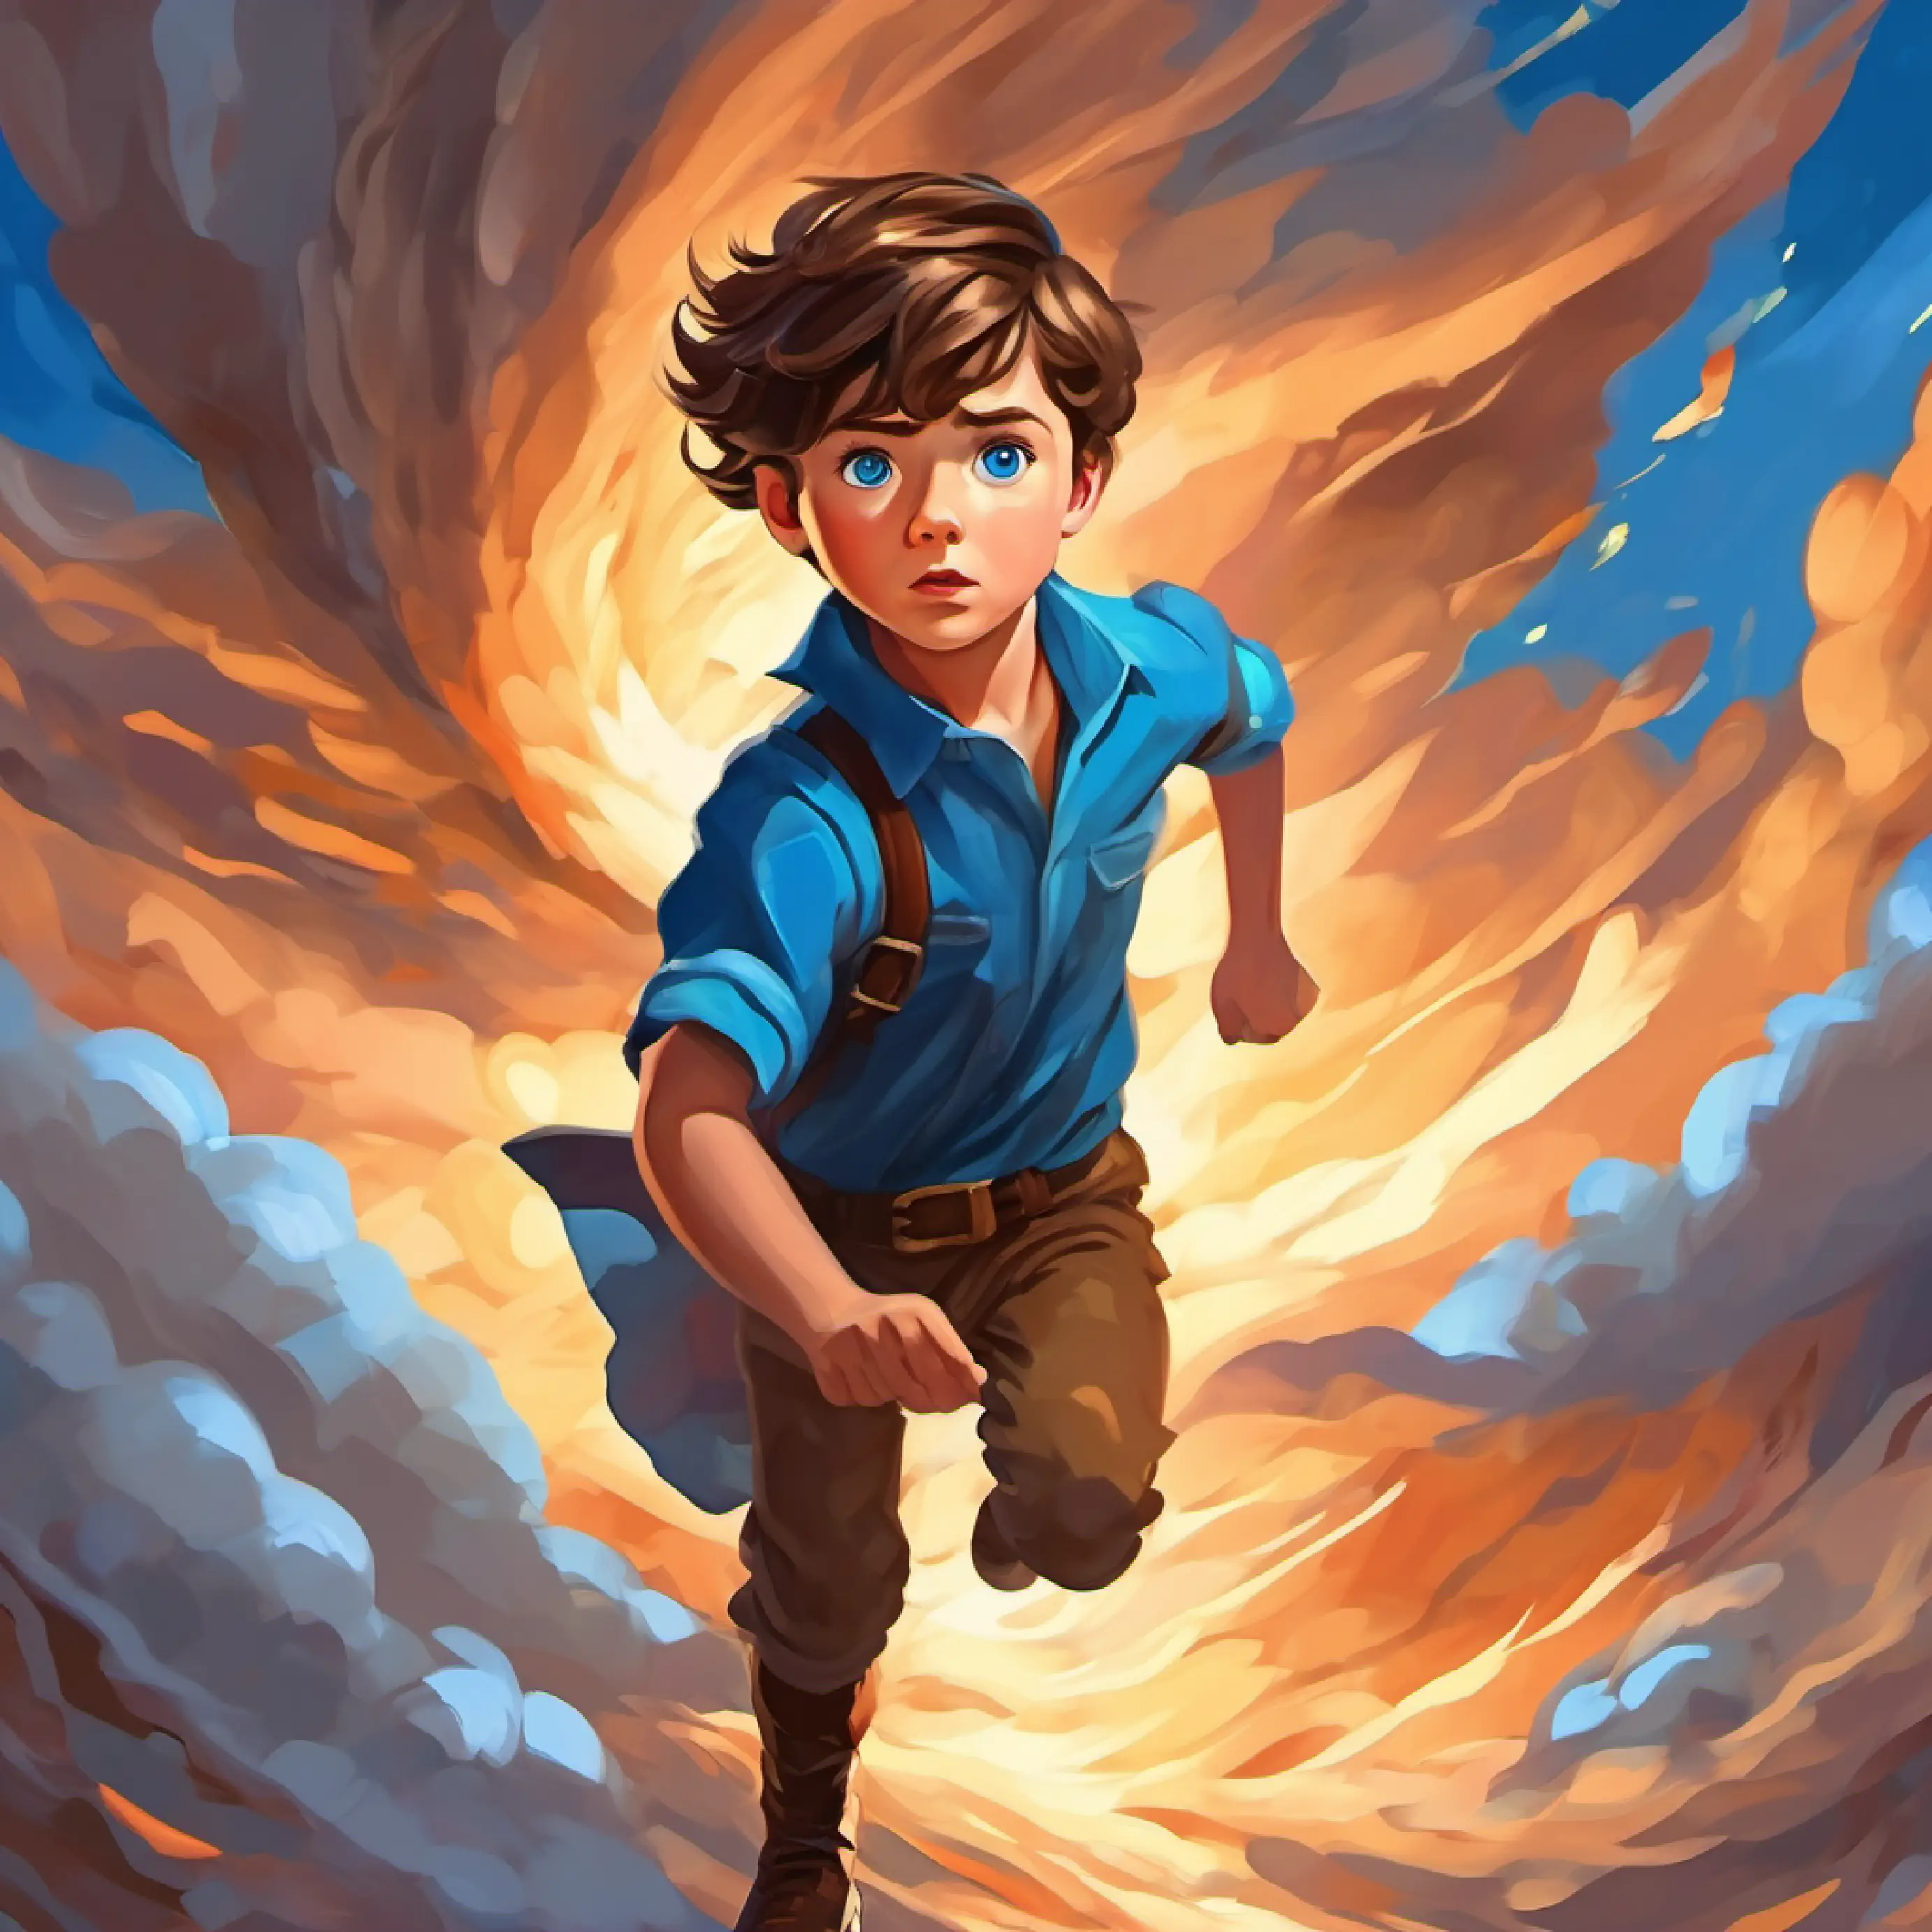 Young boy, short brown hair, blue eyes, adventurous spirit displays bravery in face of tornado.